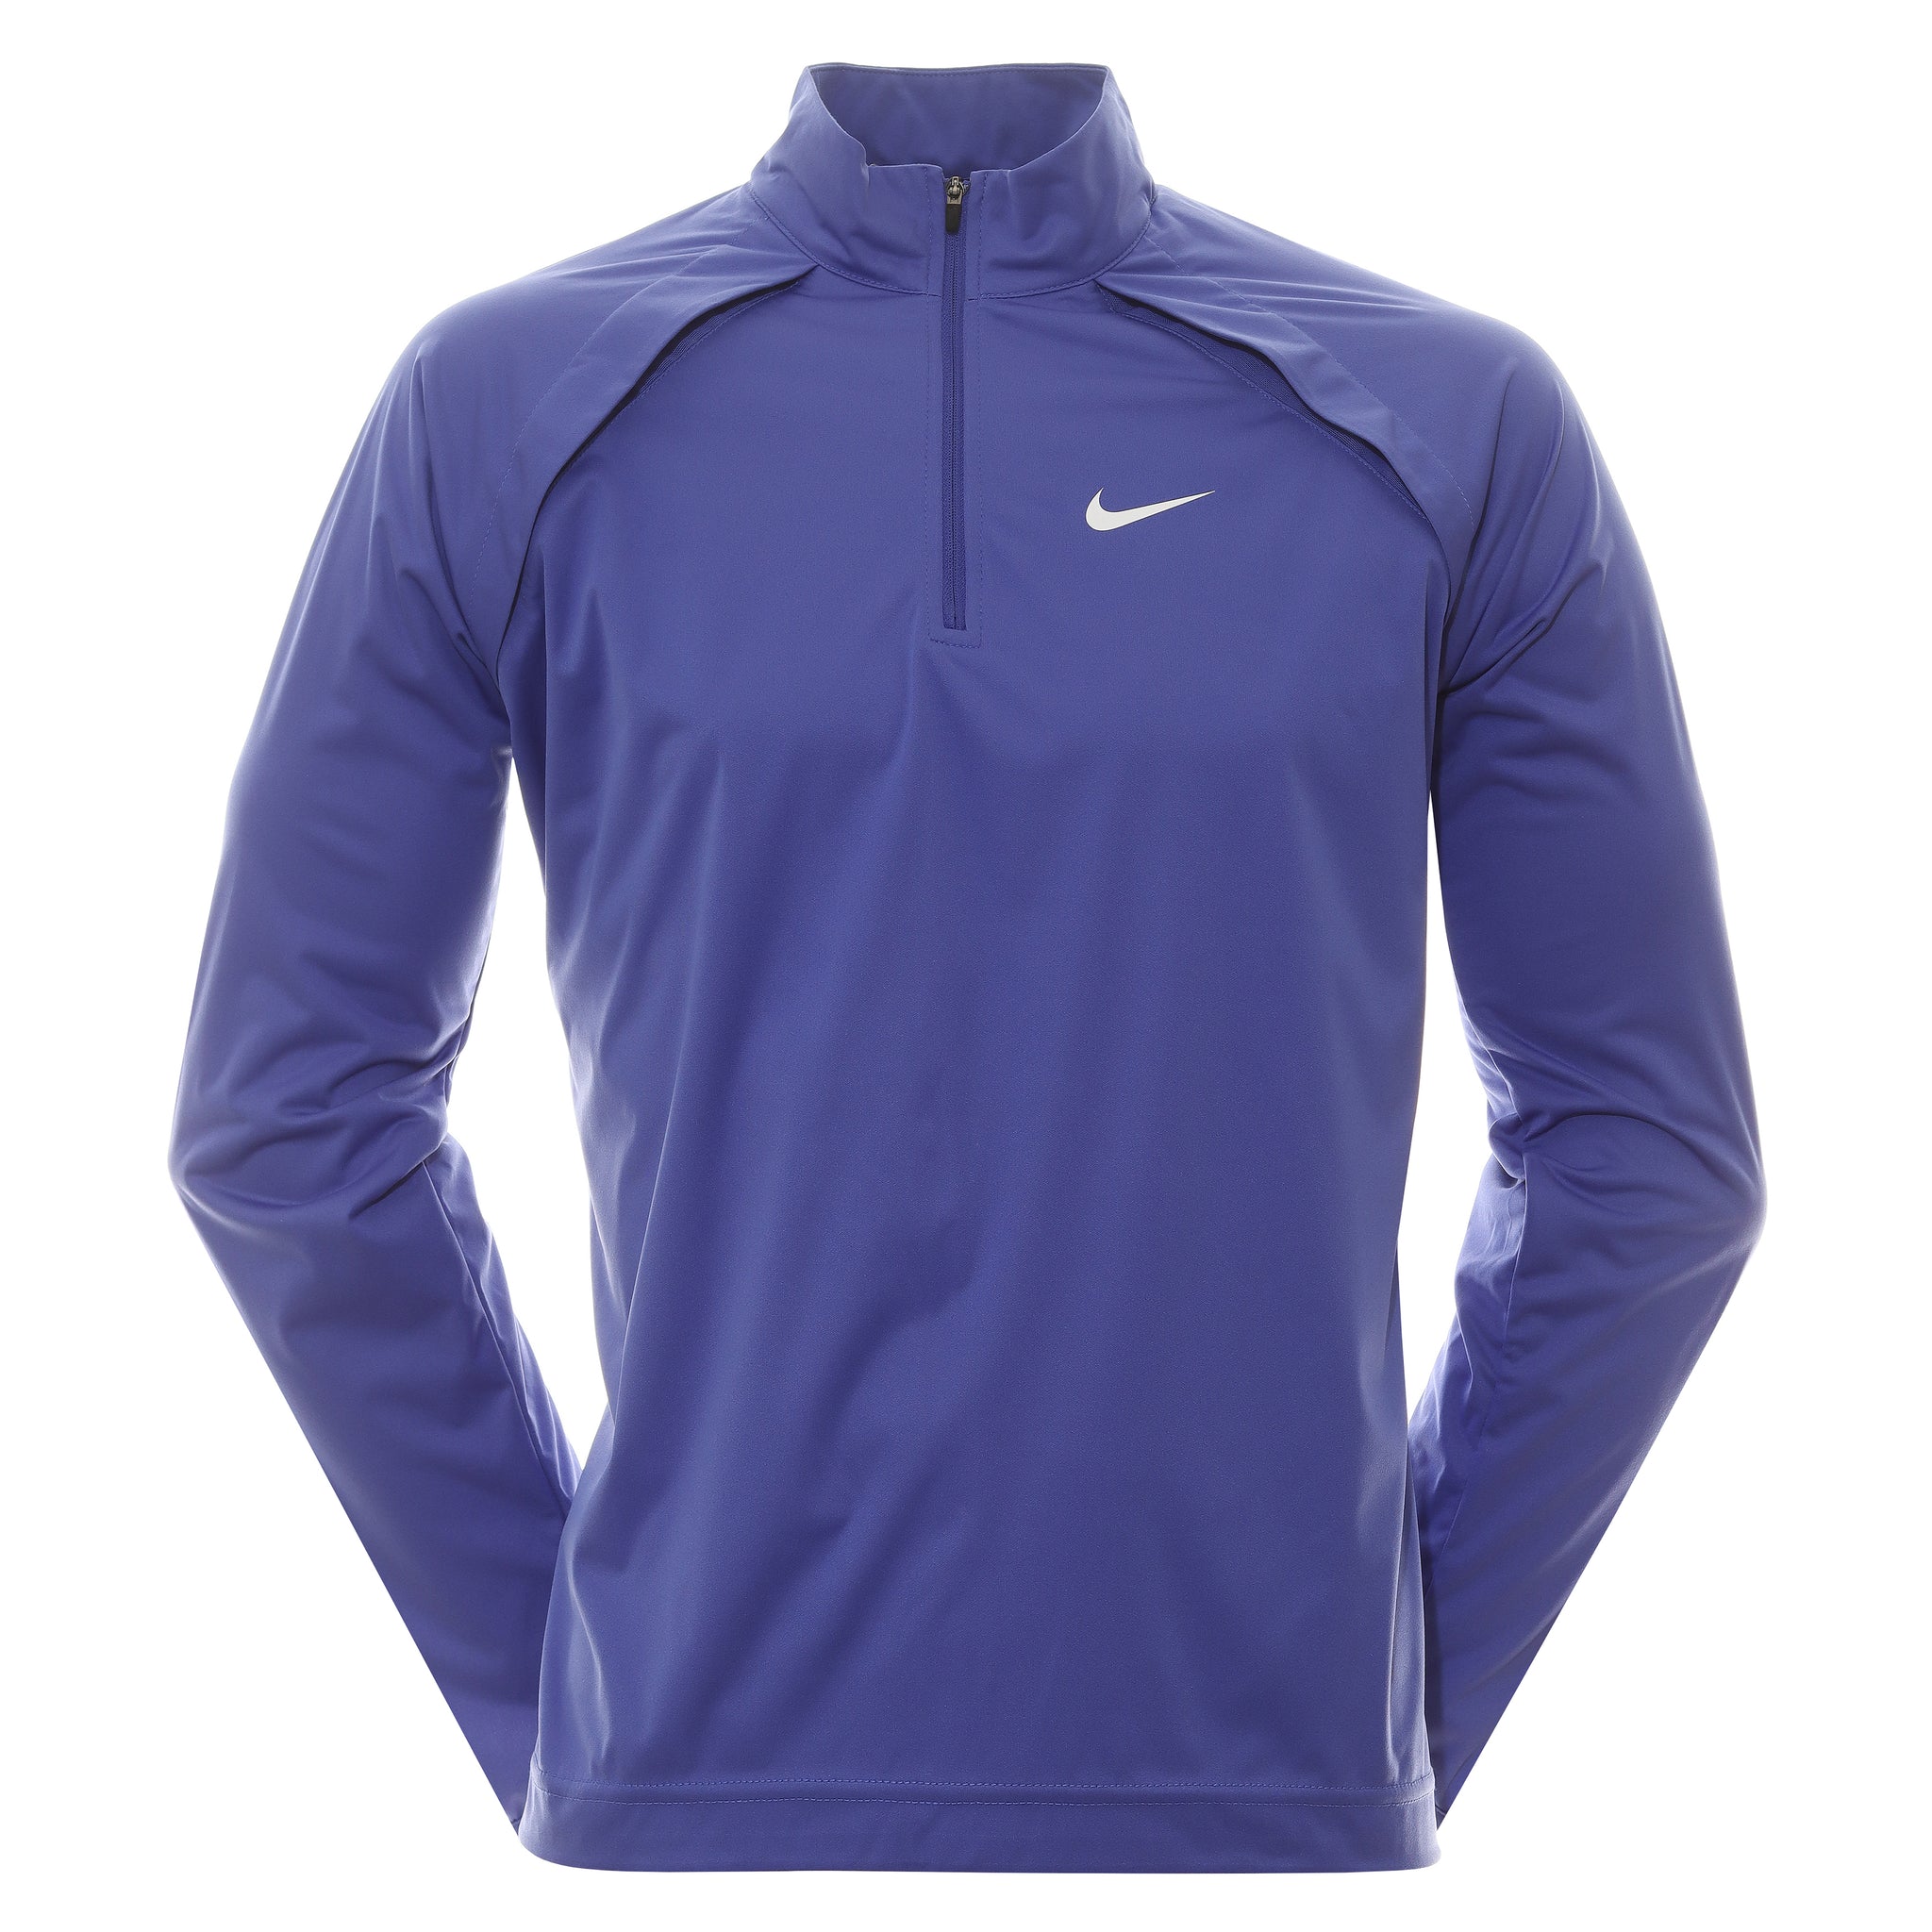 Nike Golf Repel Tour 1/2 Zip Jacket